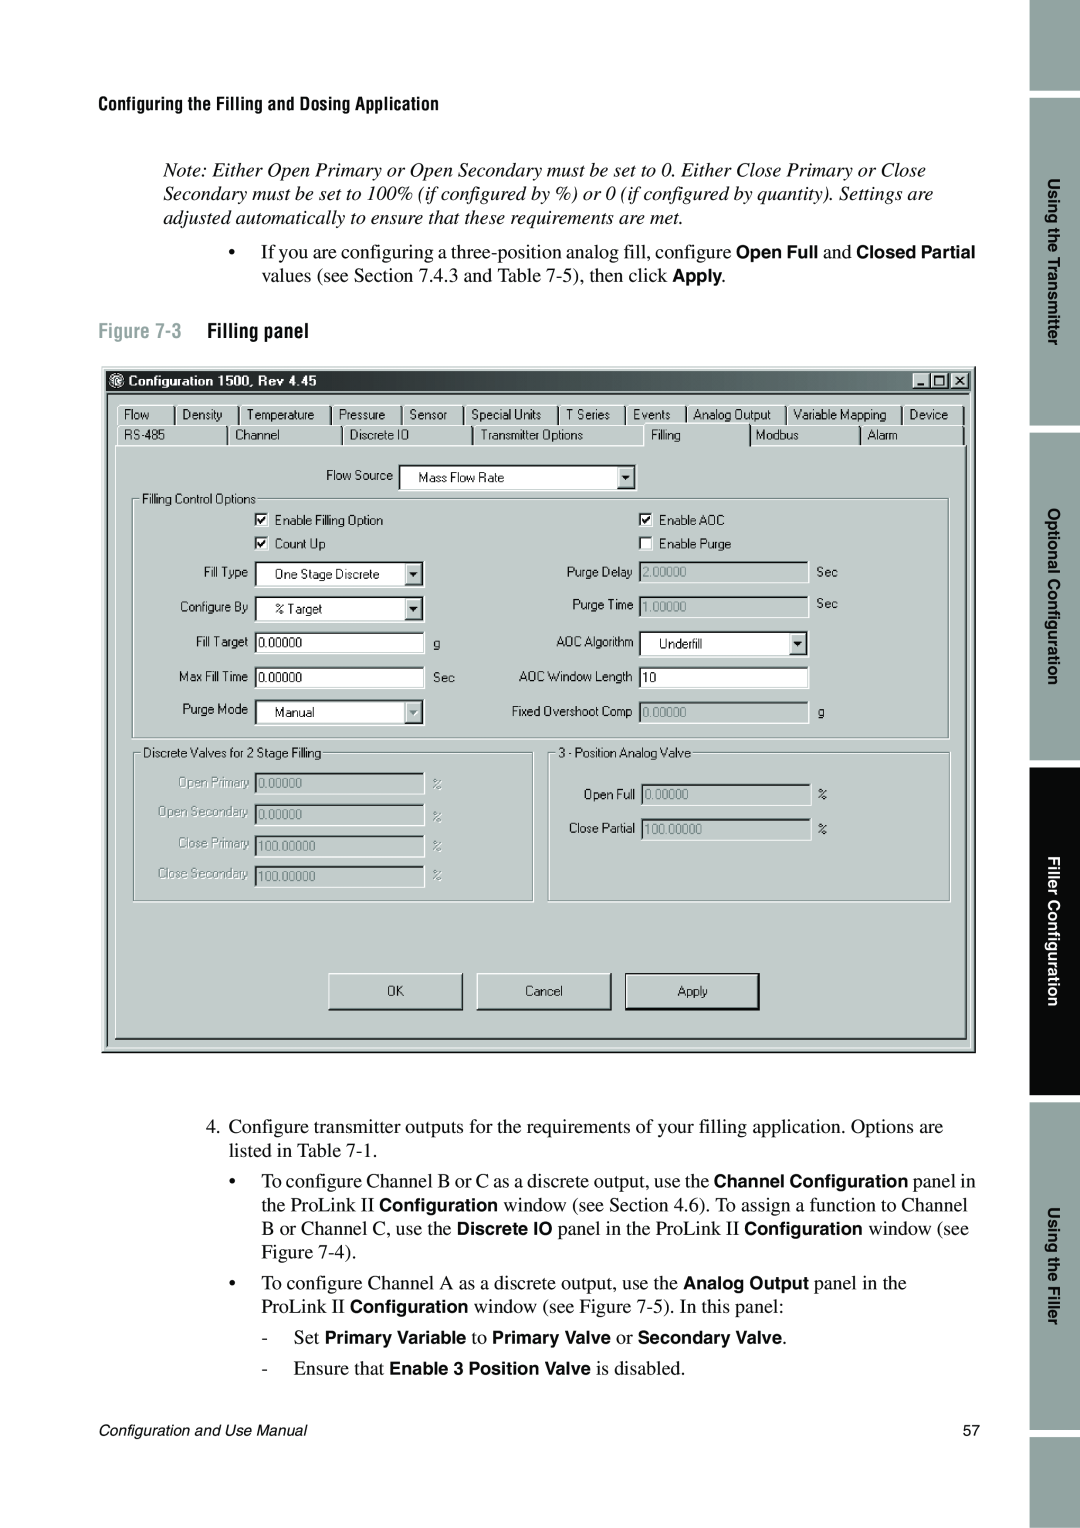 Emerson Process Management 1500 manual 3 Filling panel 